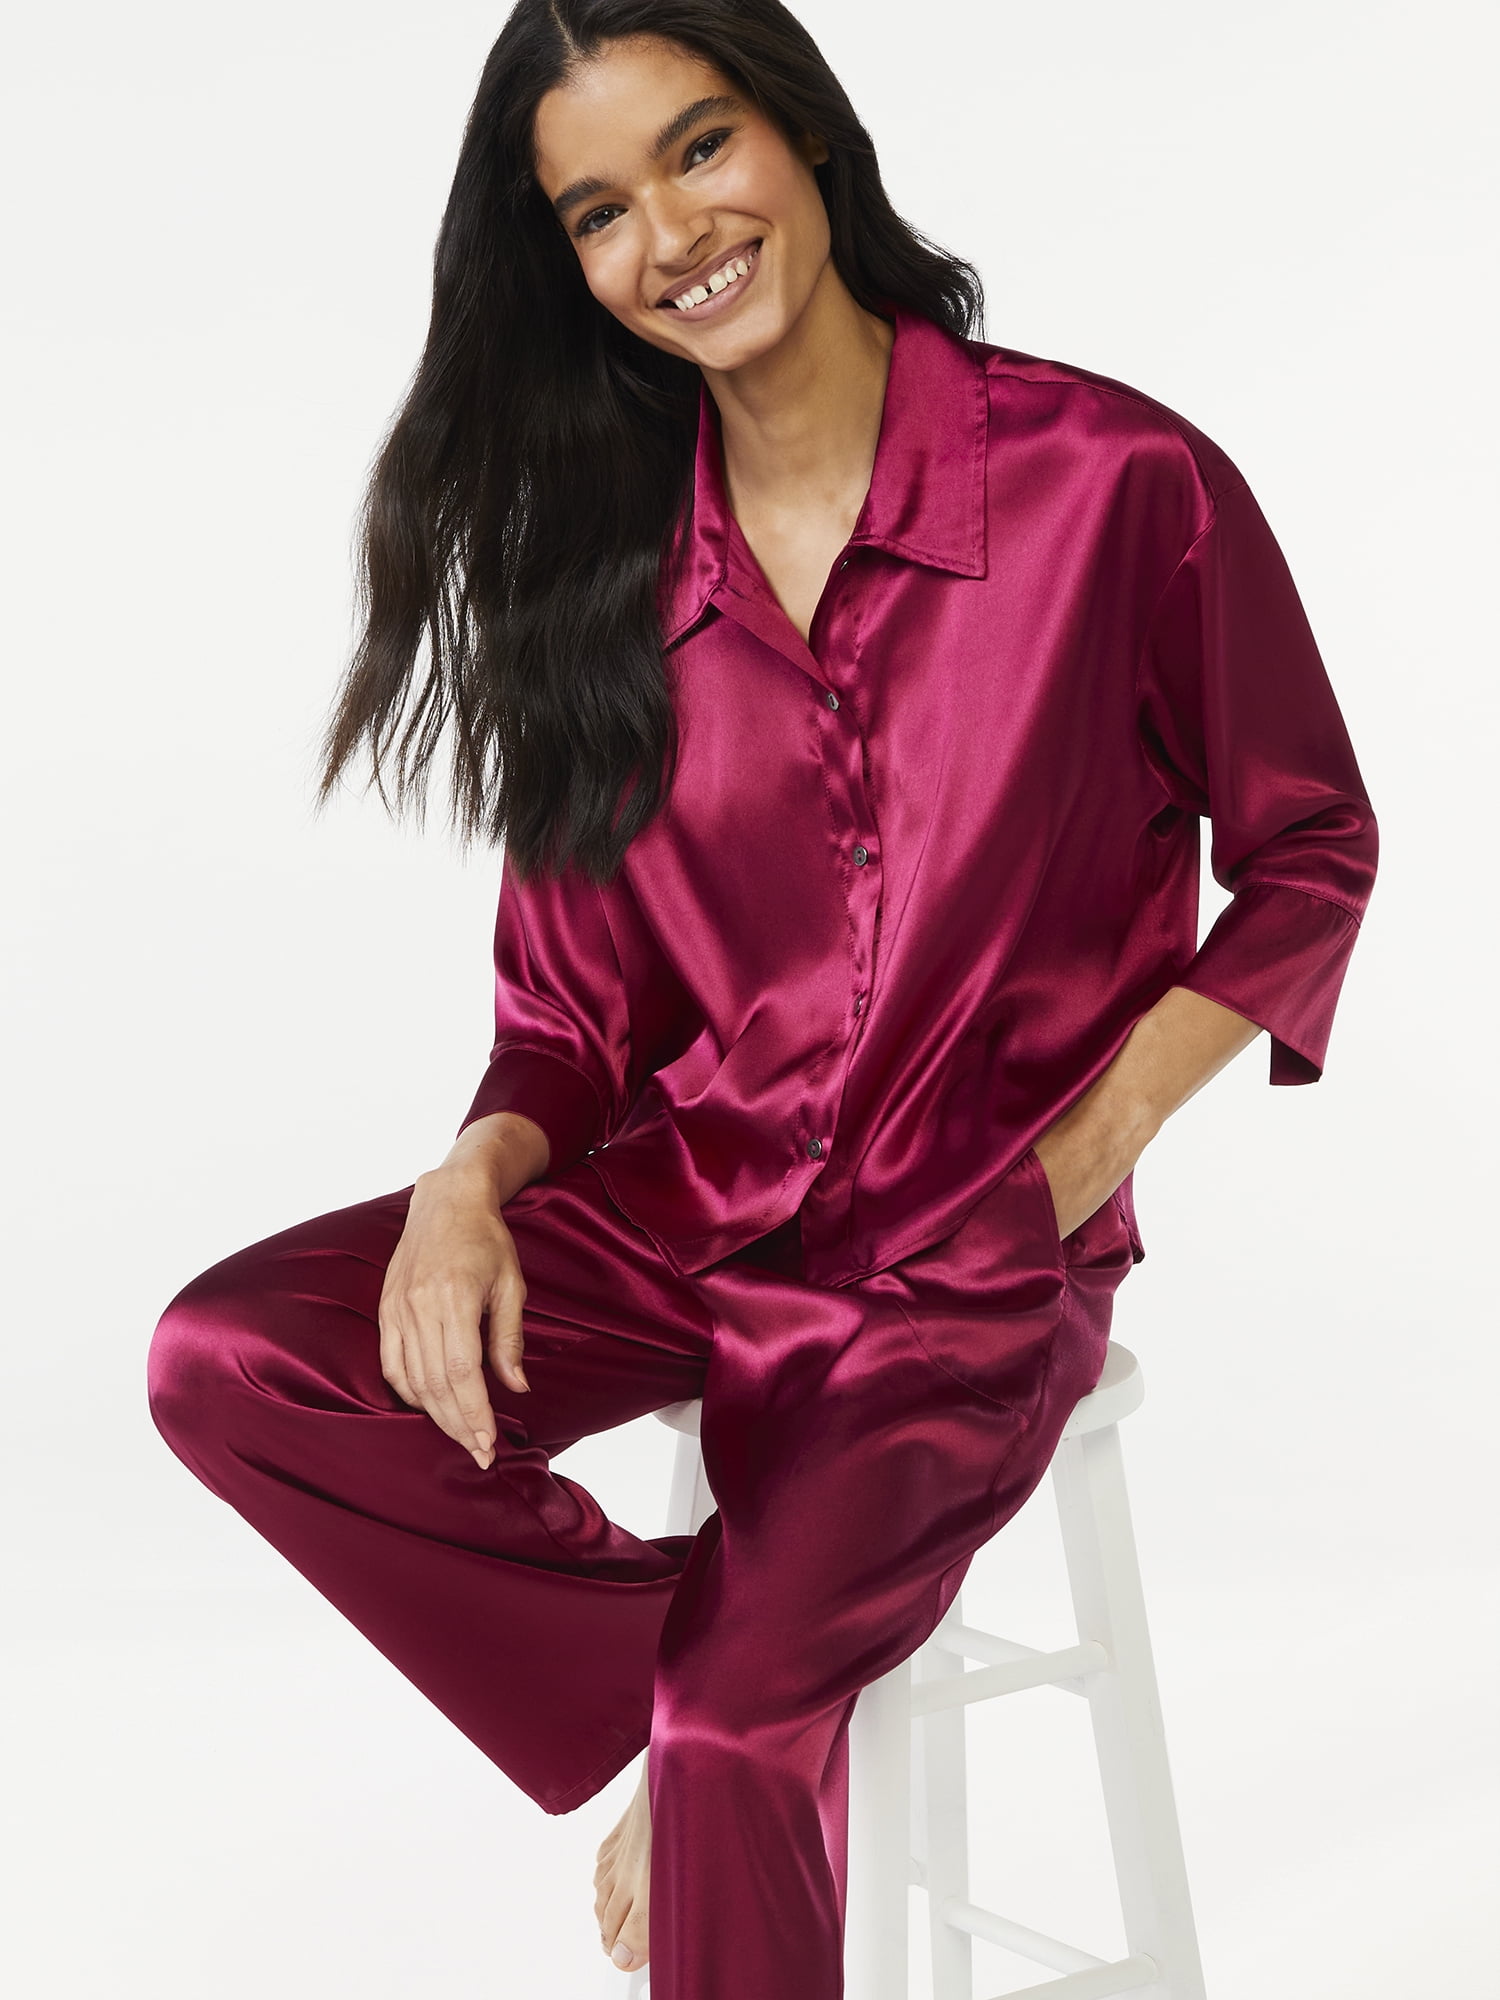 Ik heb een Engelse les hek Opwekking Joyspun Women's Satin Pajama Sleep Set, 2-Piece, Sizes S to 3X - Walmart.com